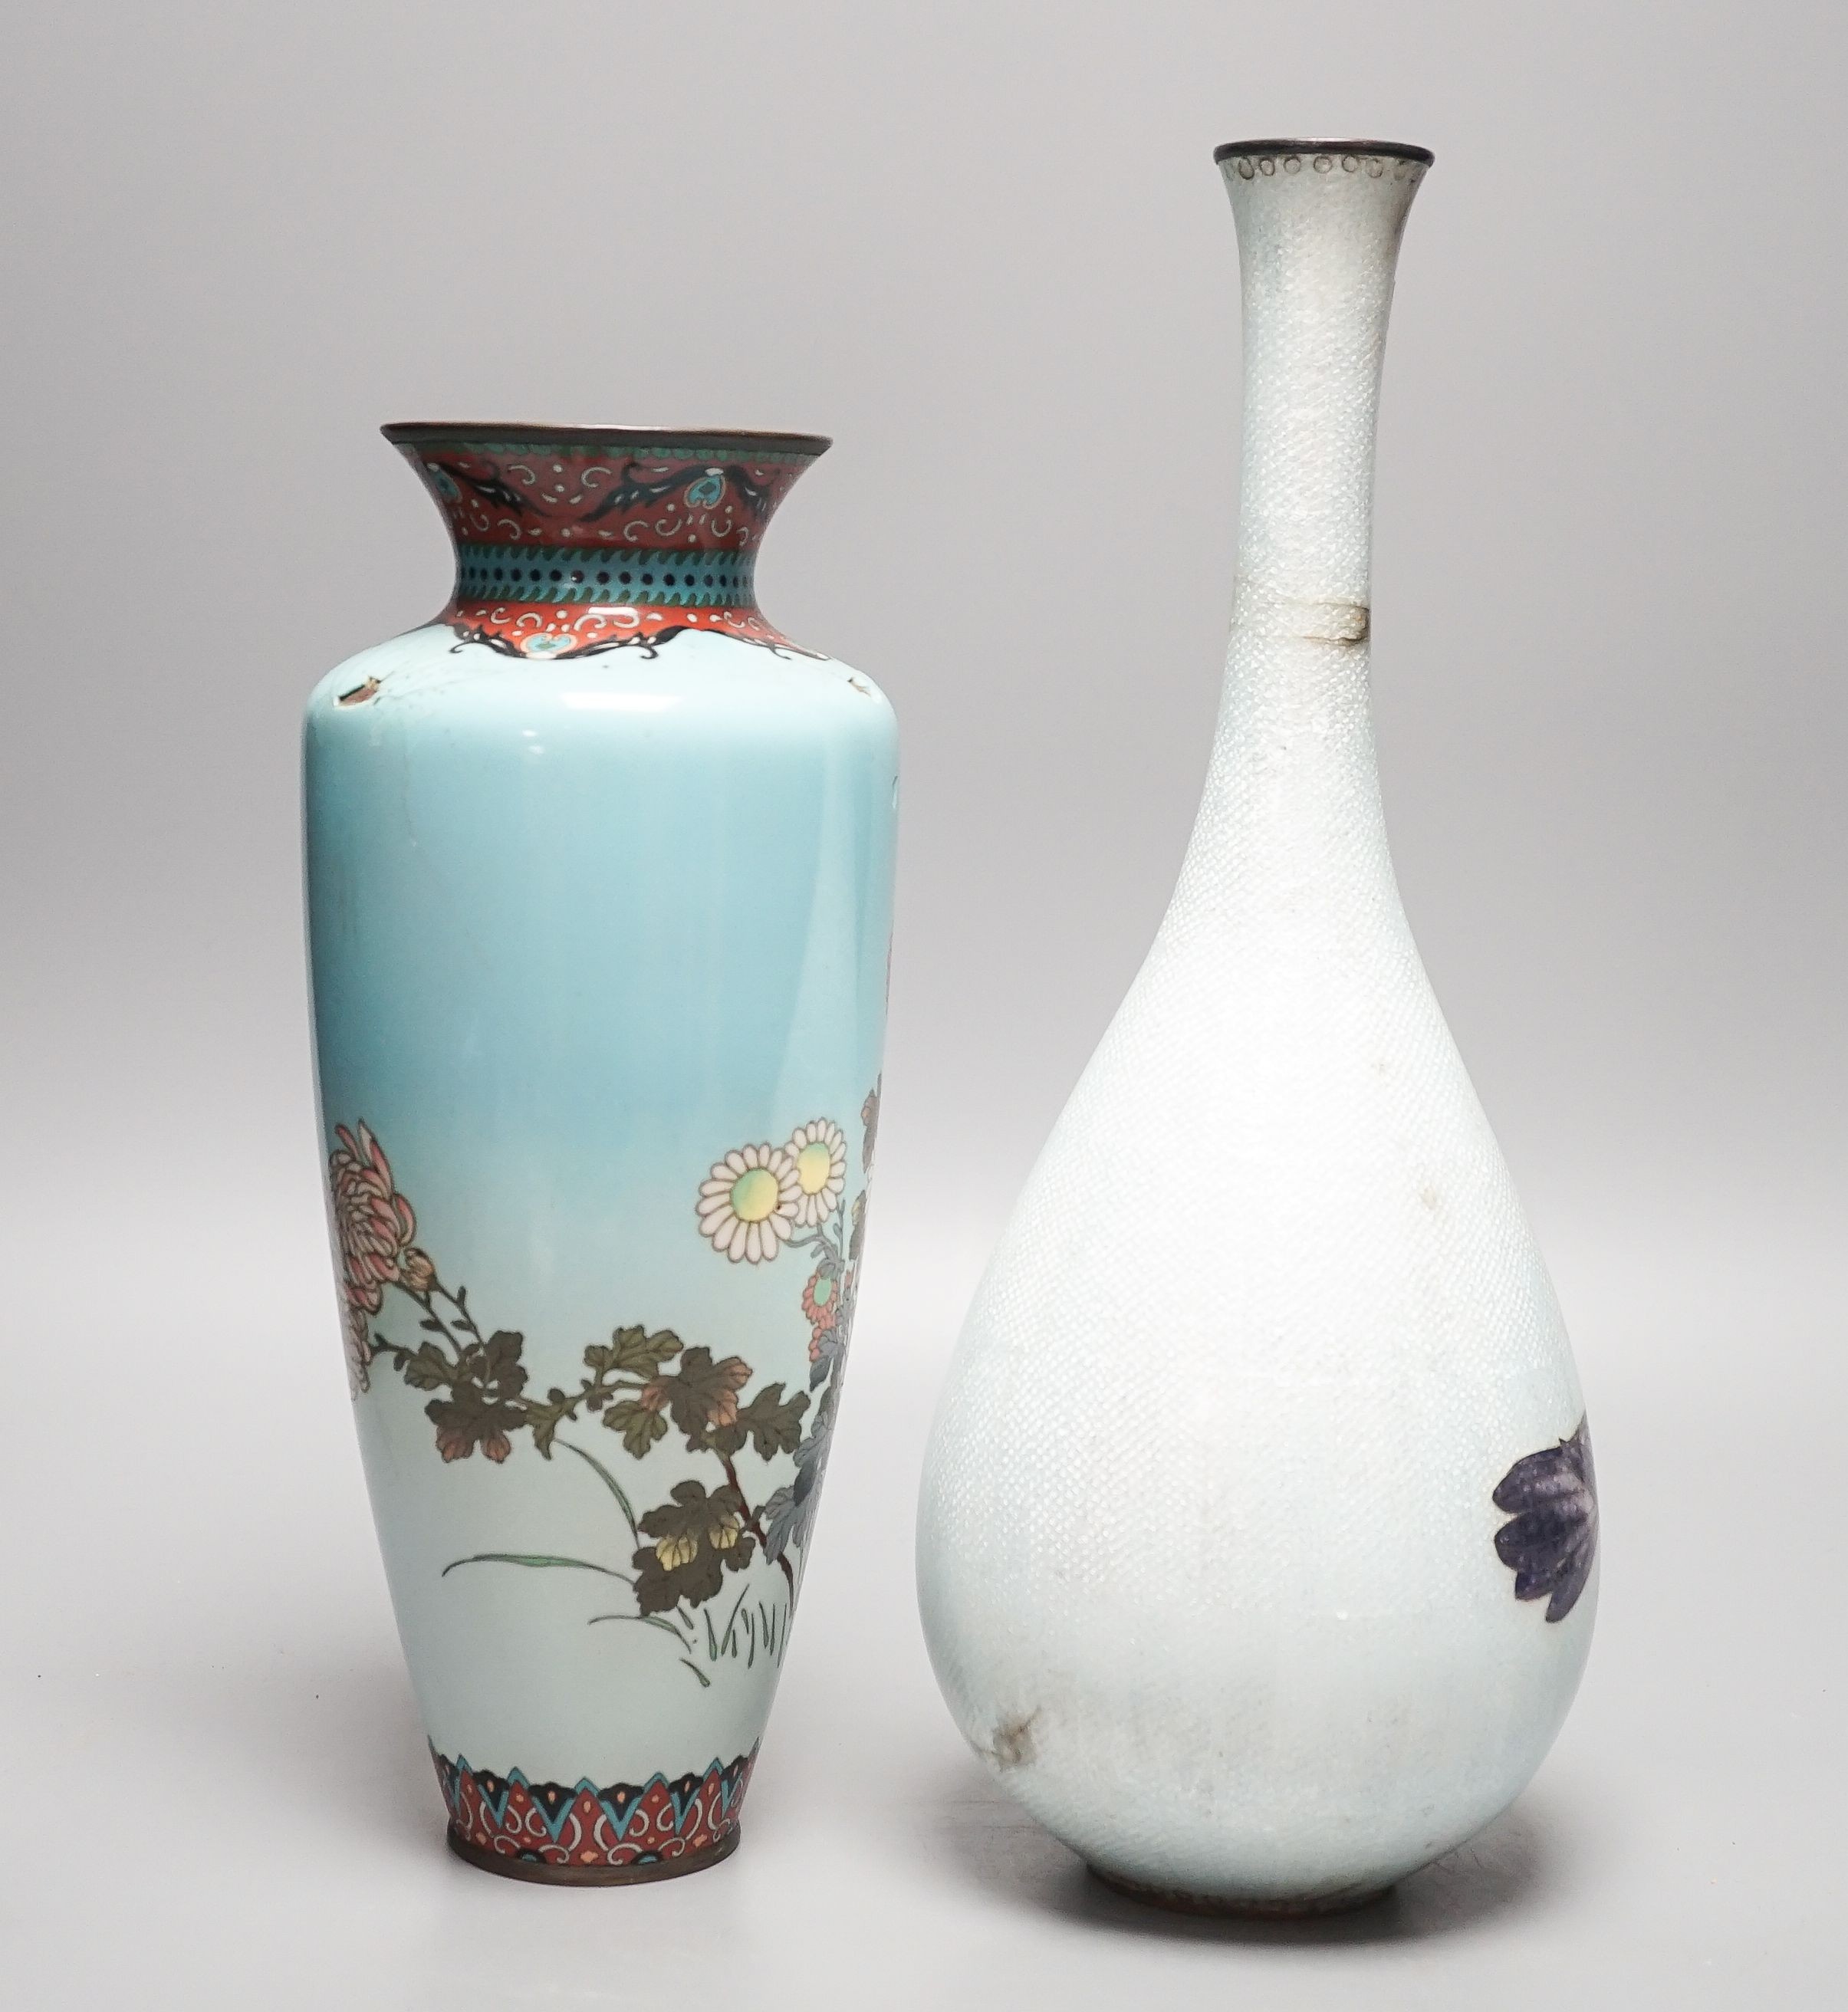 Two Japanese cloisonné enamel vases, tallest 36.5cm, Meiji period